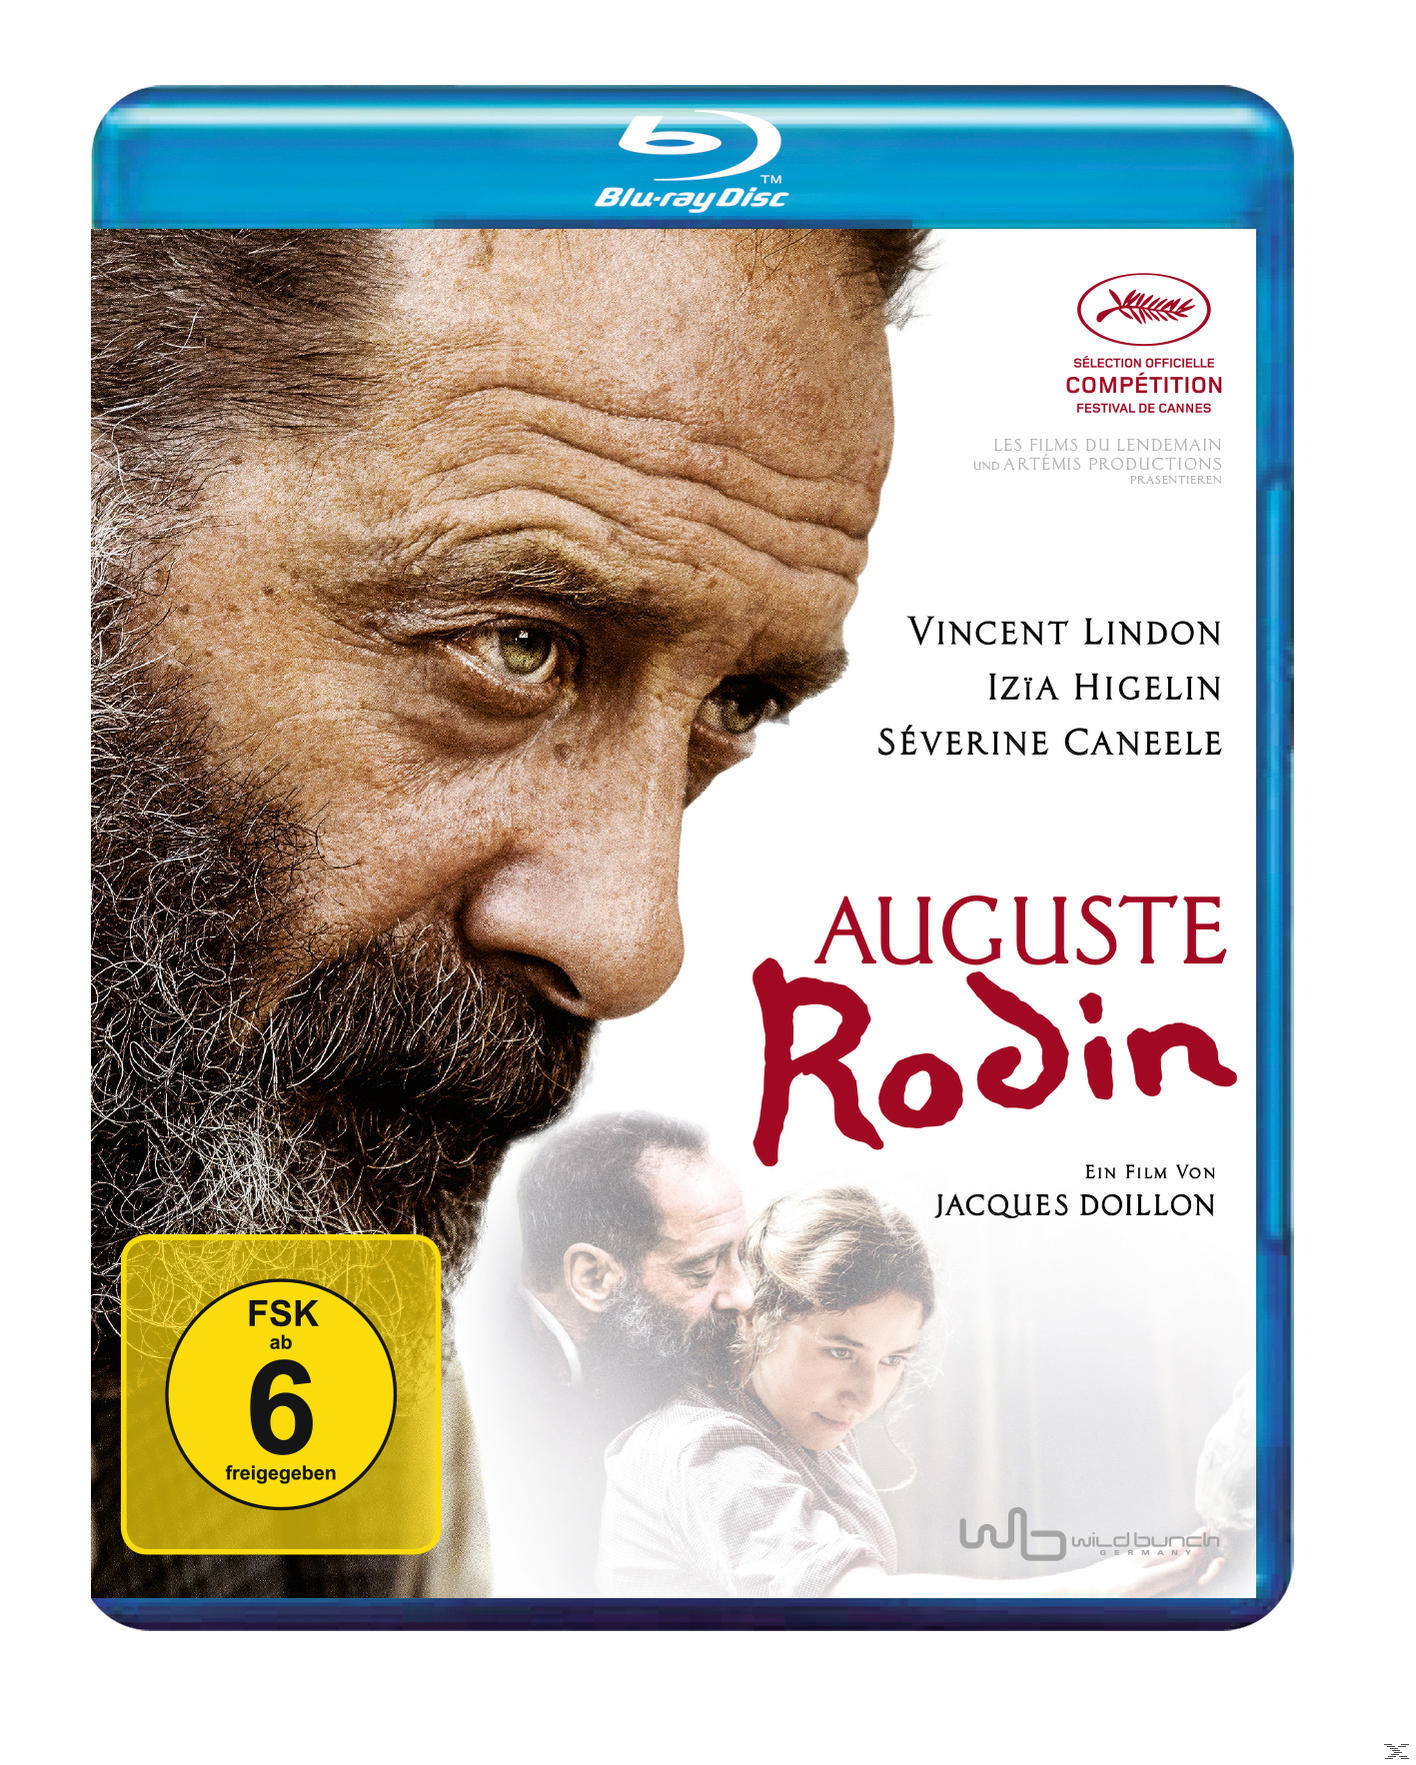 Rodin Auguste Blu-ray